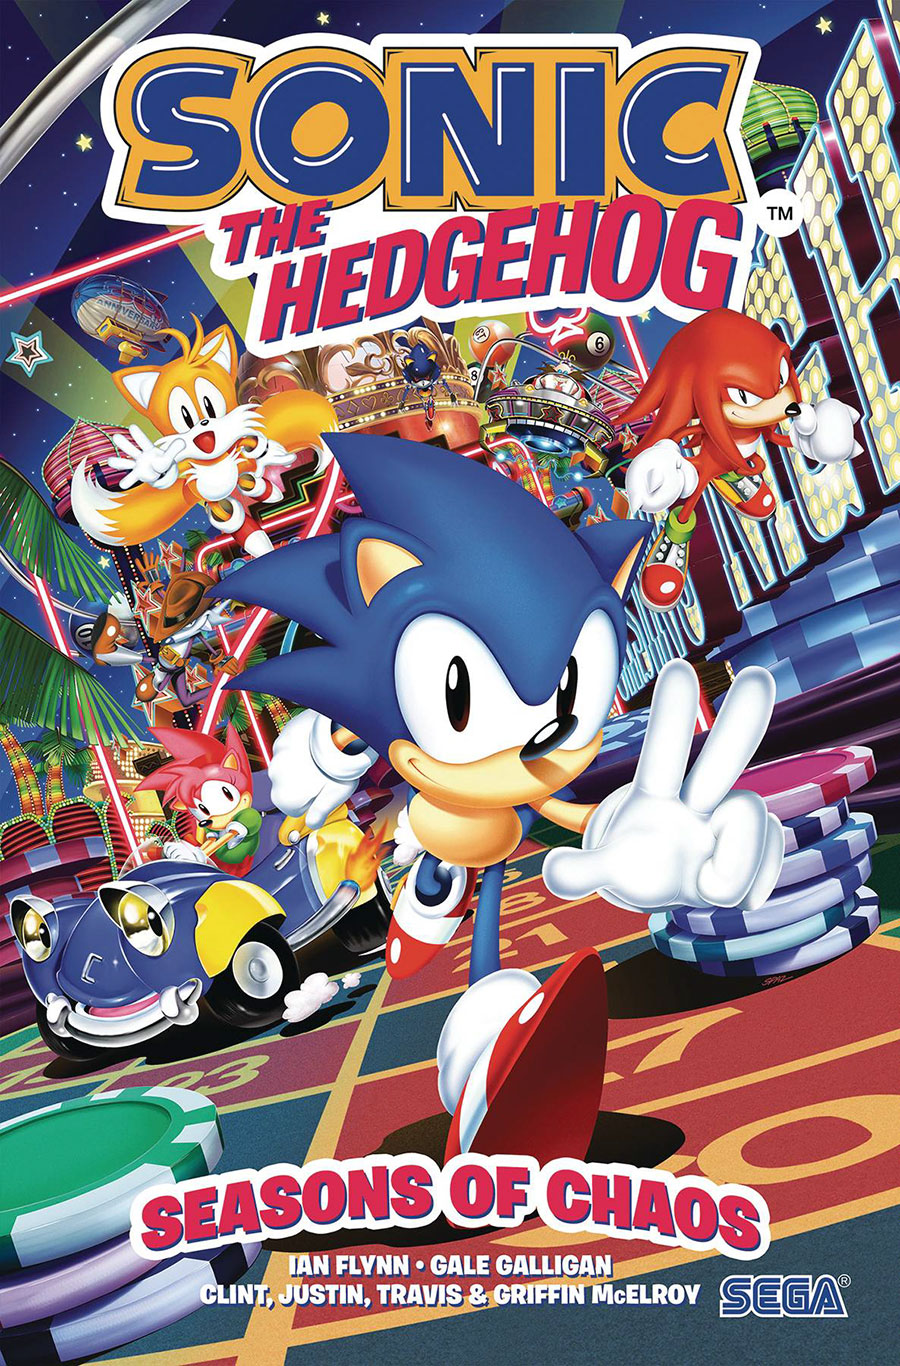 Sonic The Hedgehog Seasons Of Chaos TP